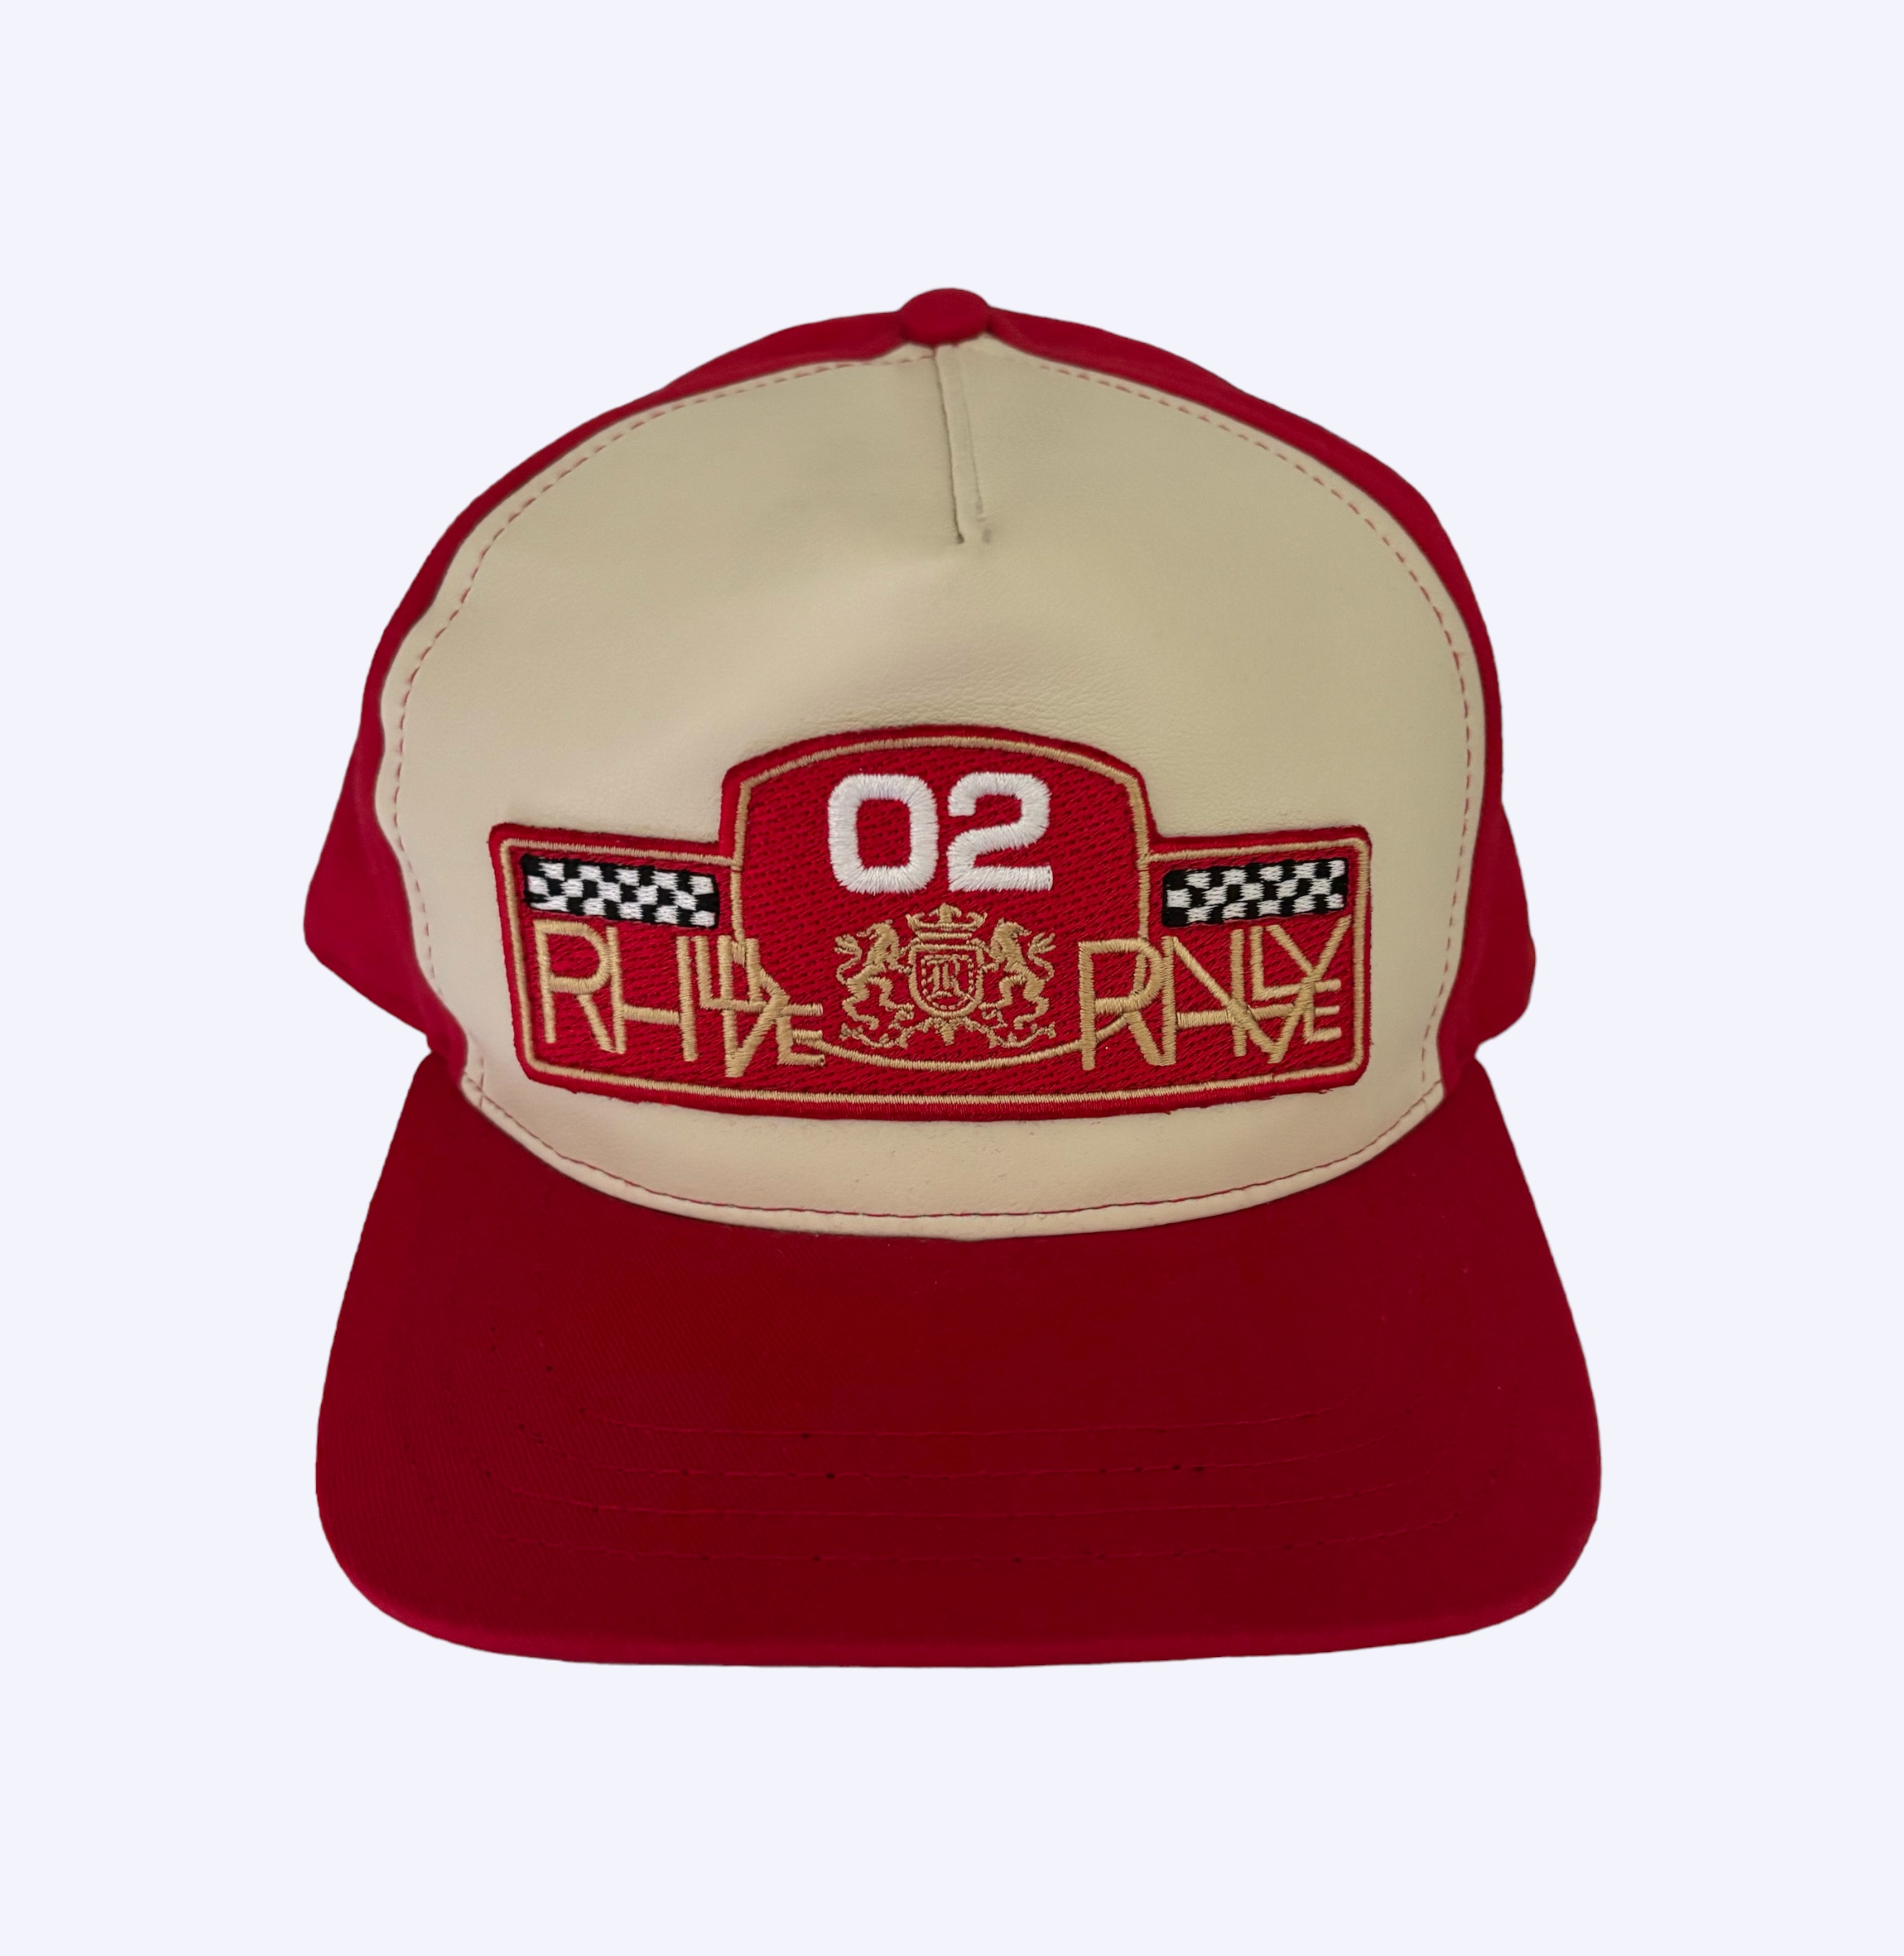 Rhude Leather “Race Prix” Hat